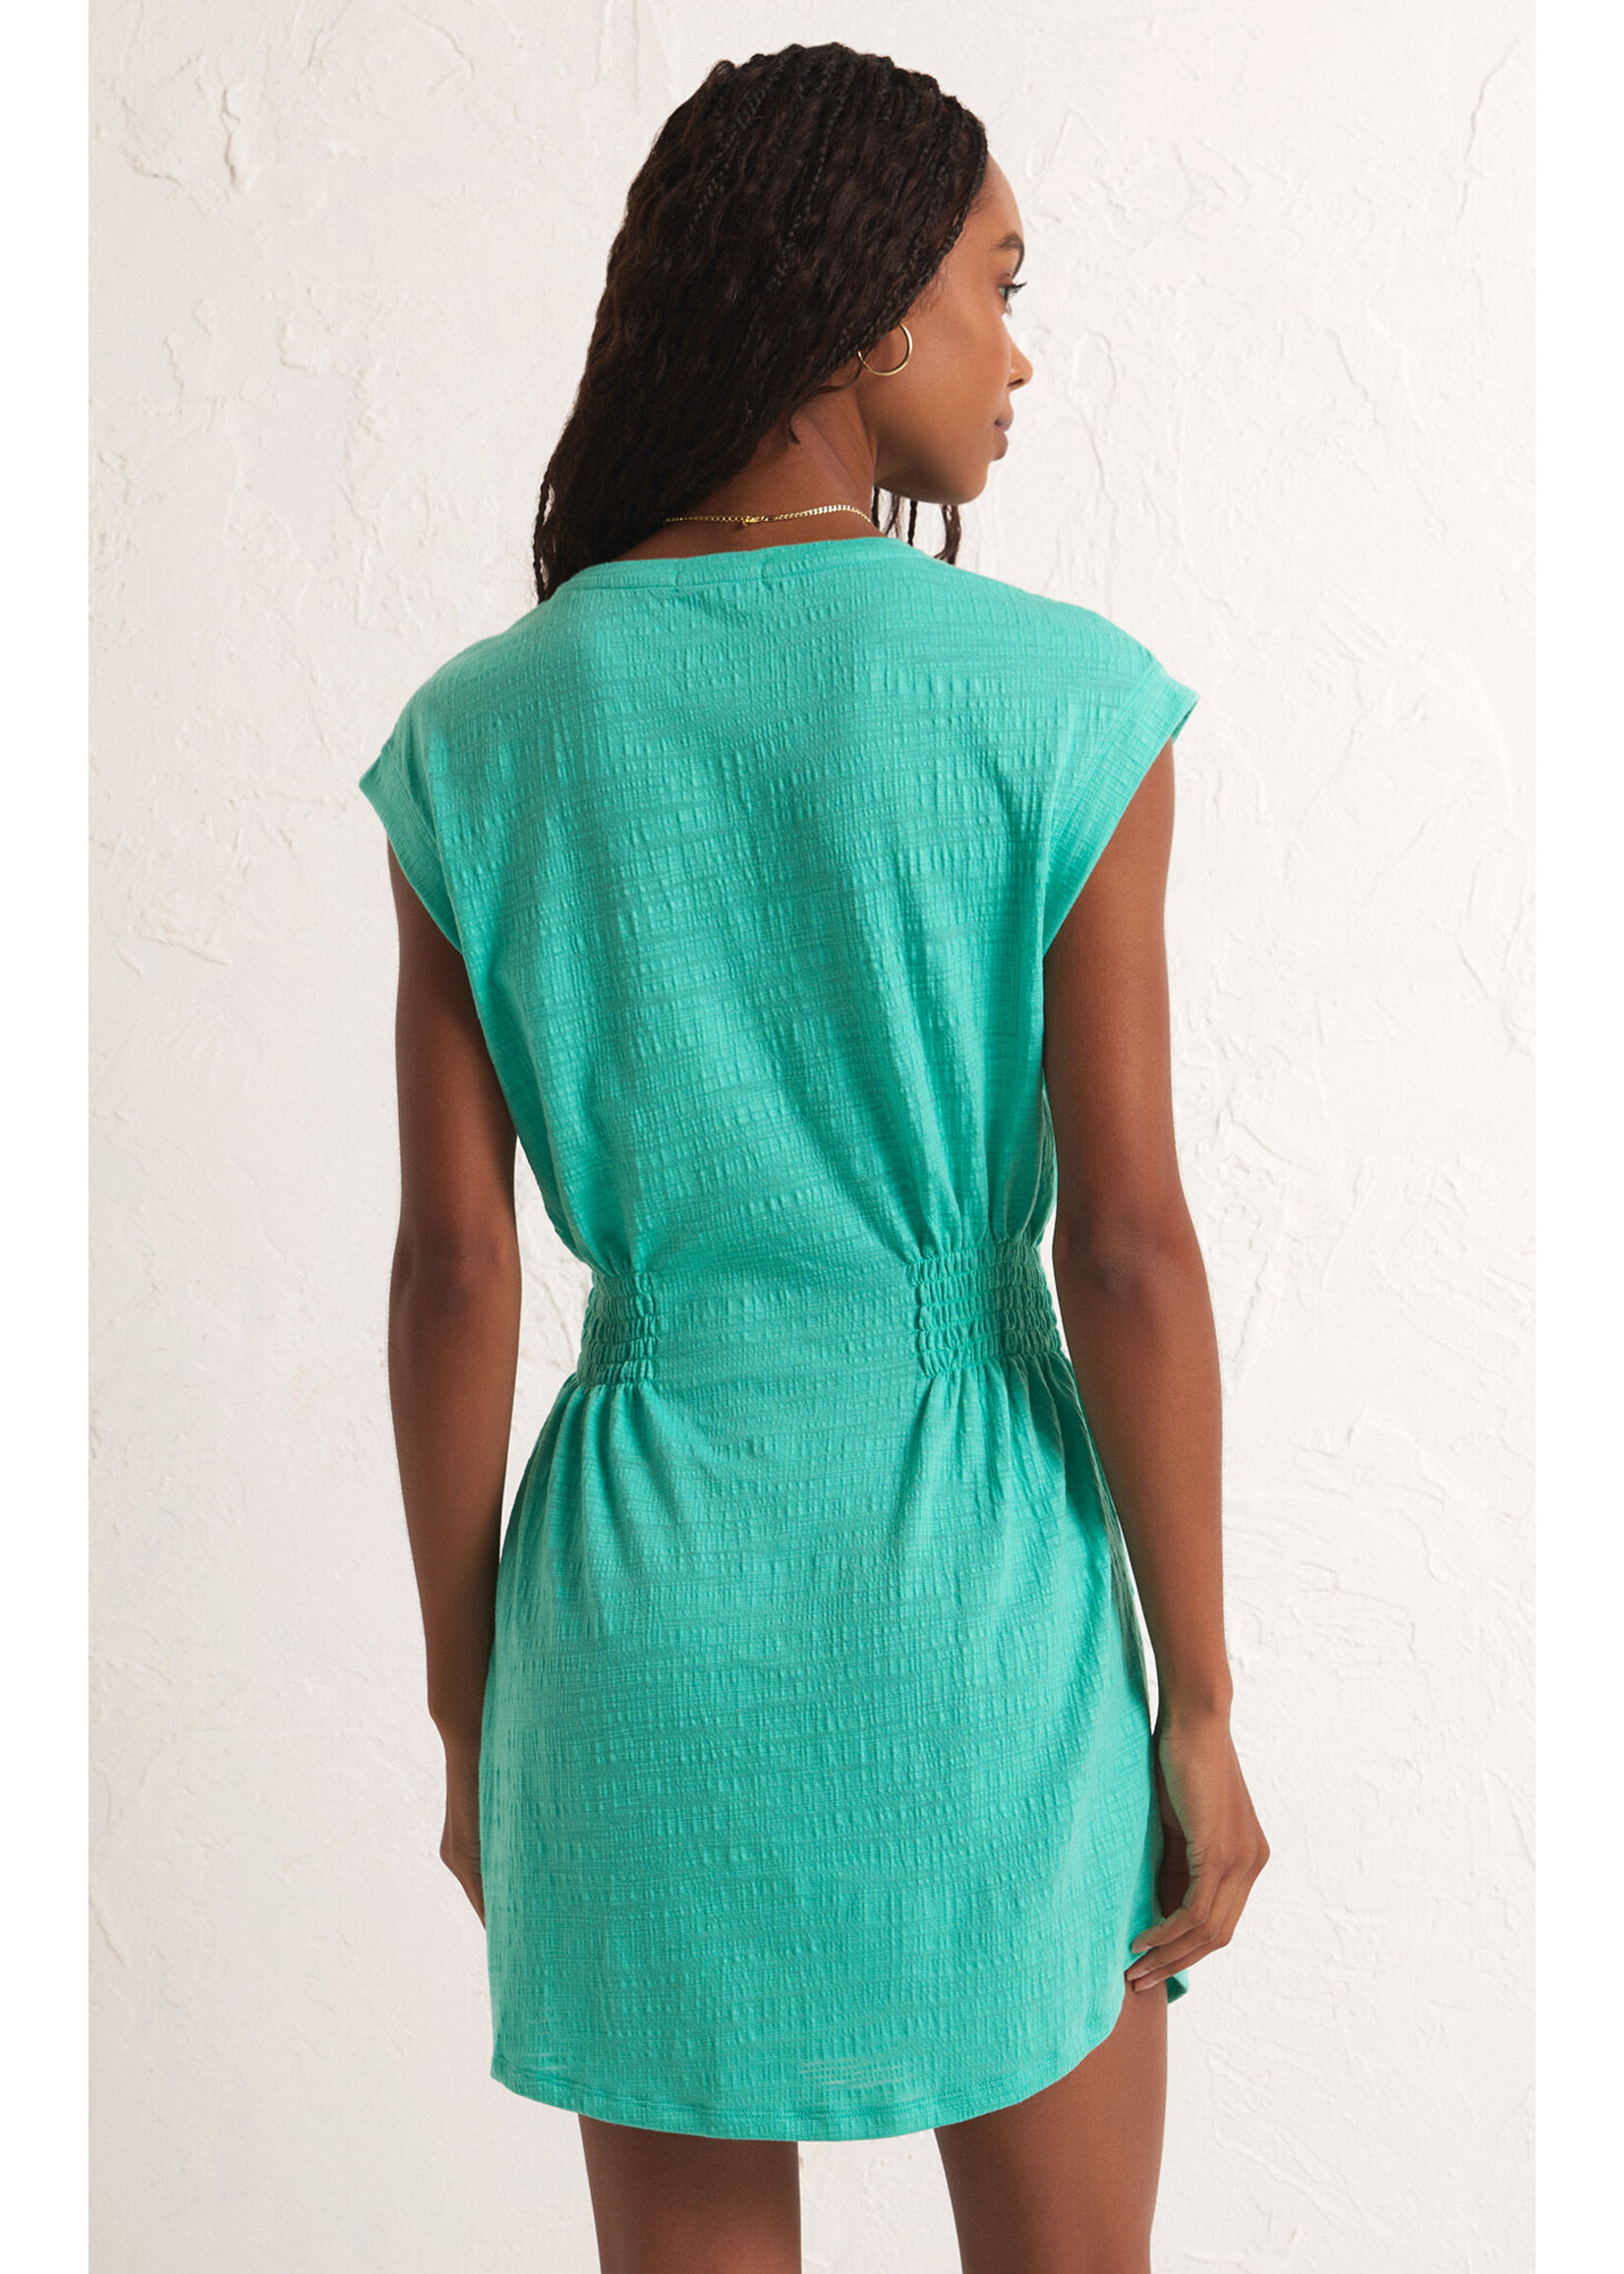 Z Supply Rowan Textured Knit Dress - ZD233689